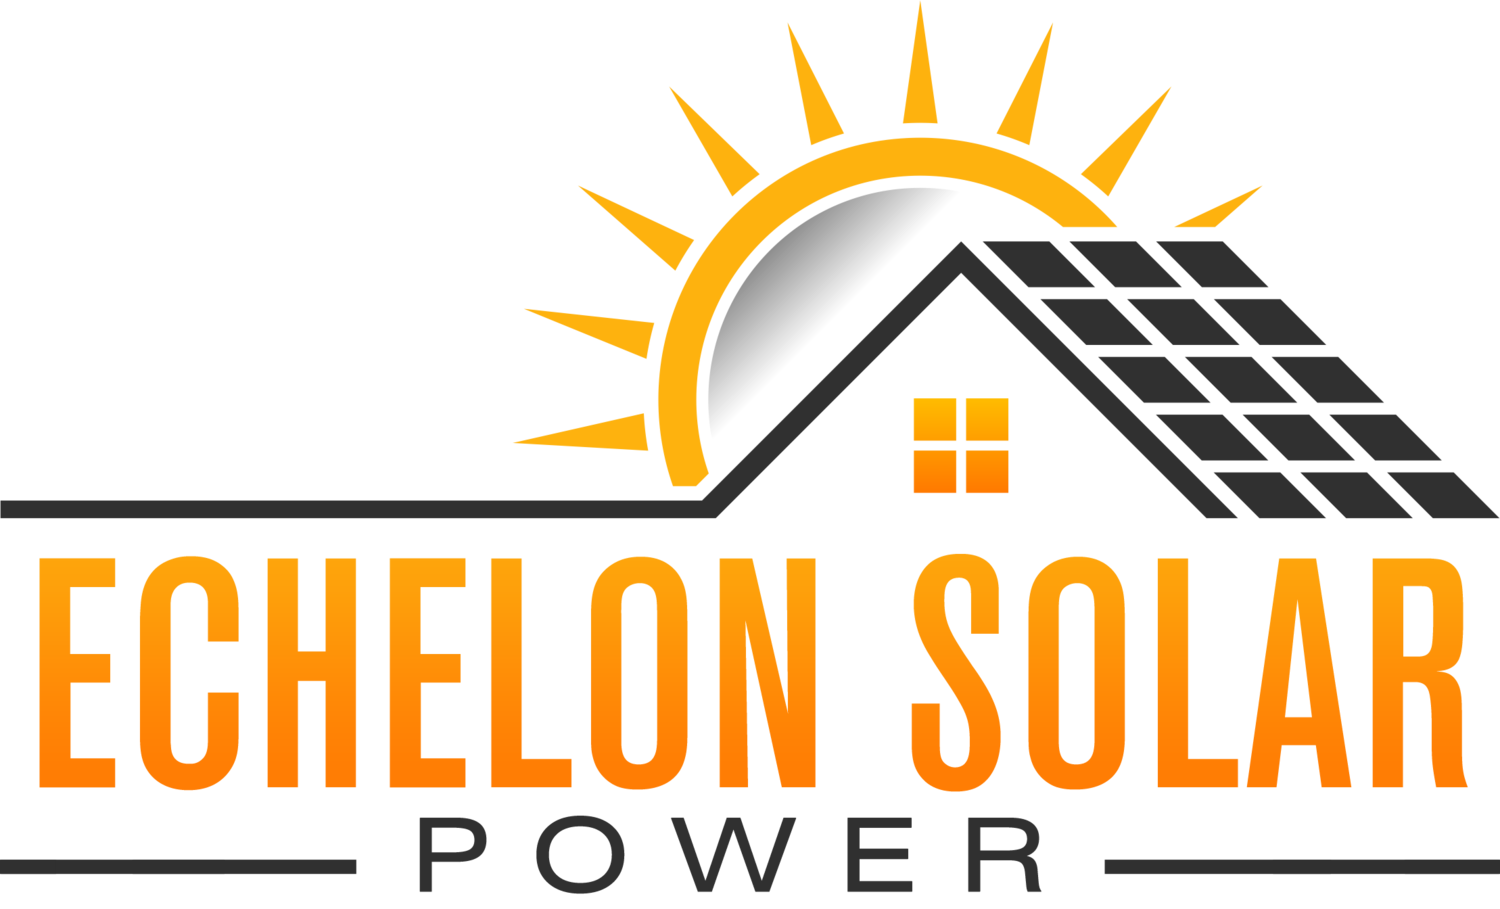 Echelon Solar Power